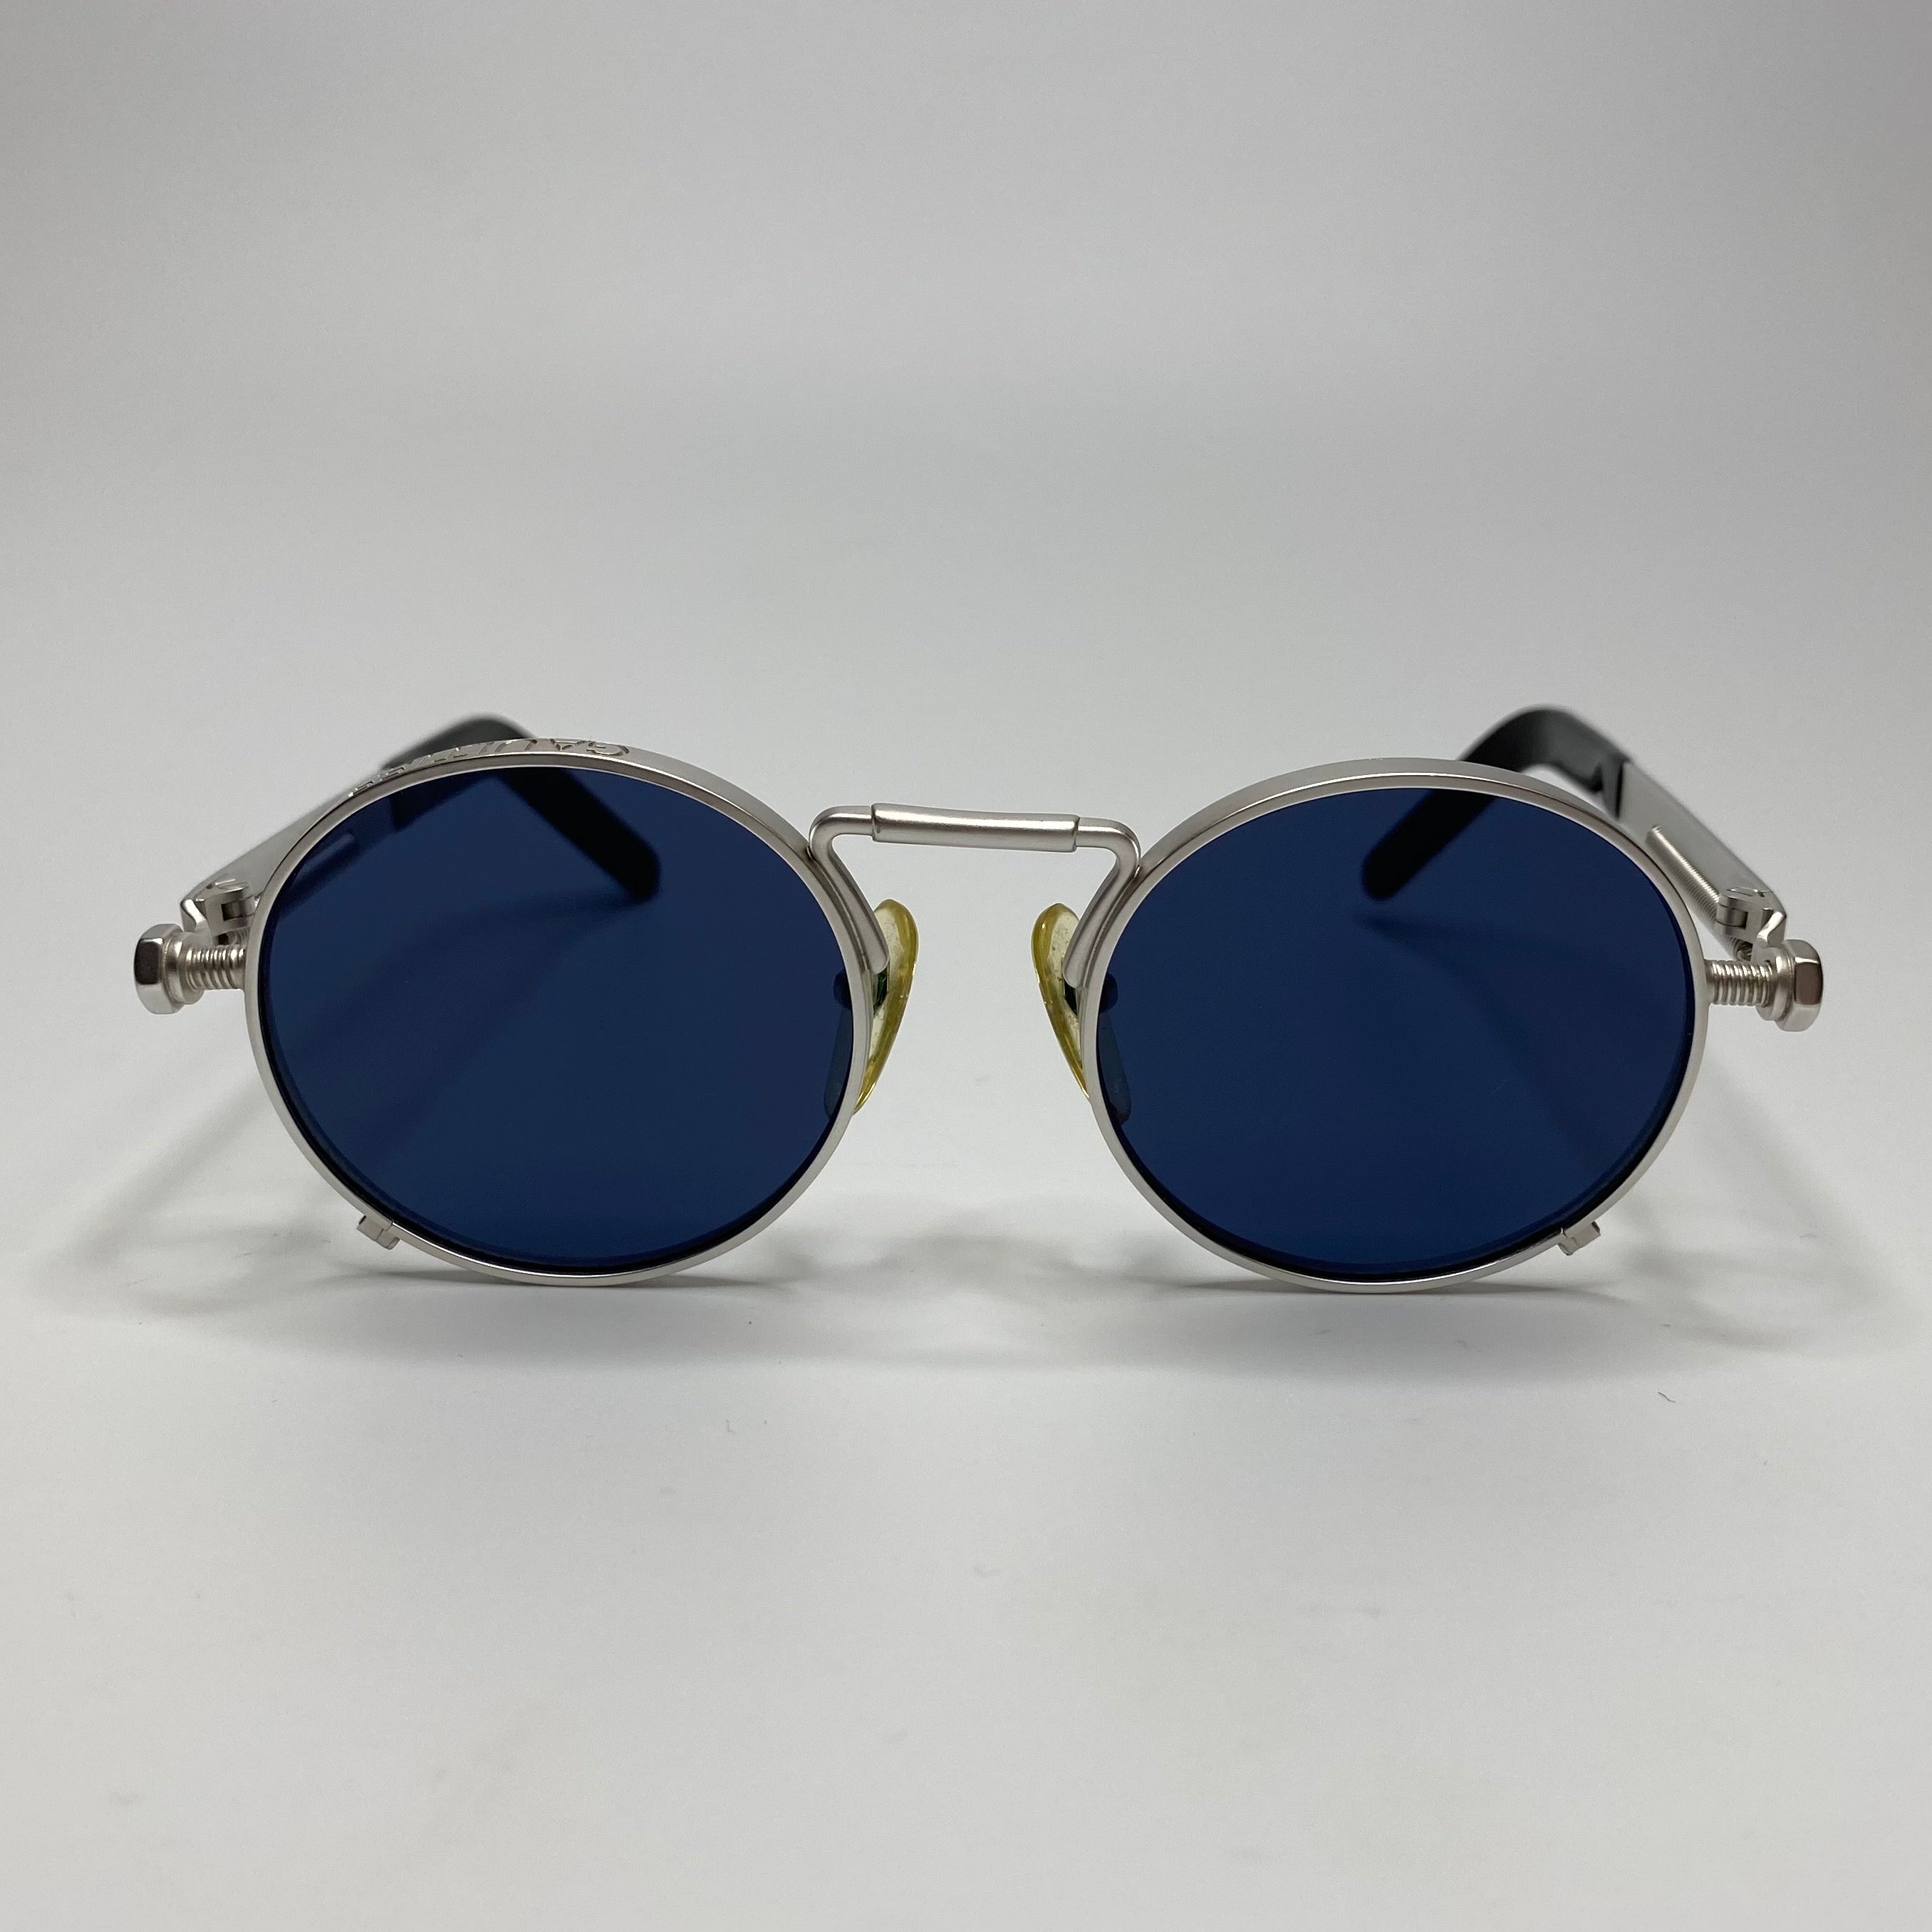 Jean Paul Gaultier Vintage Sunglasses